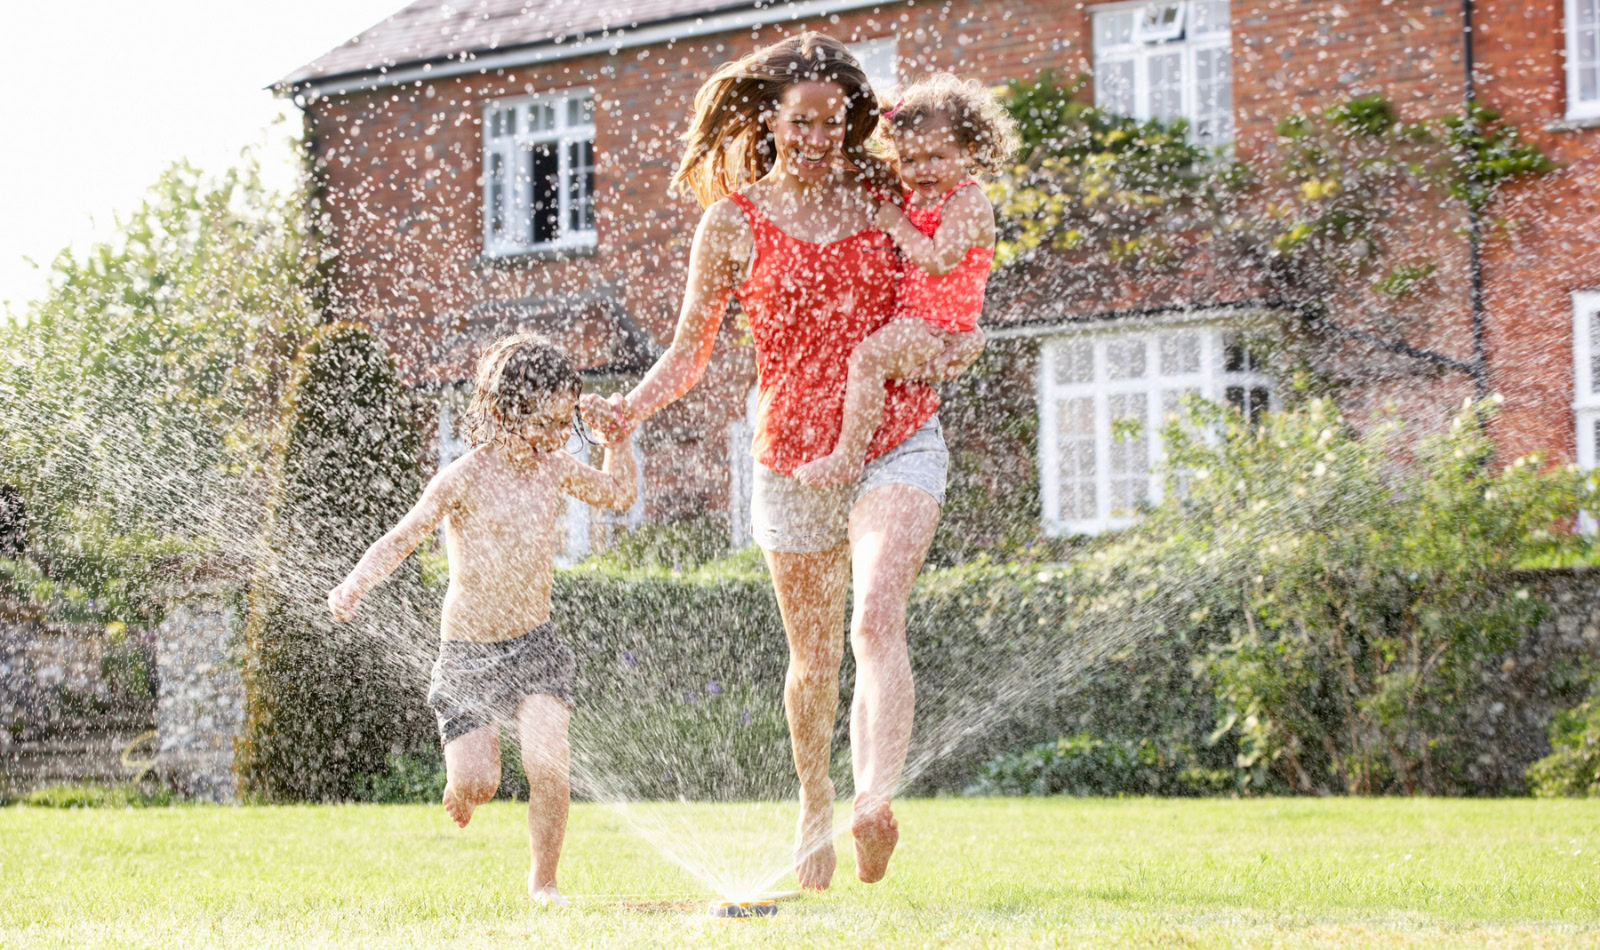 mom and kids running through a sprinkler